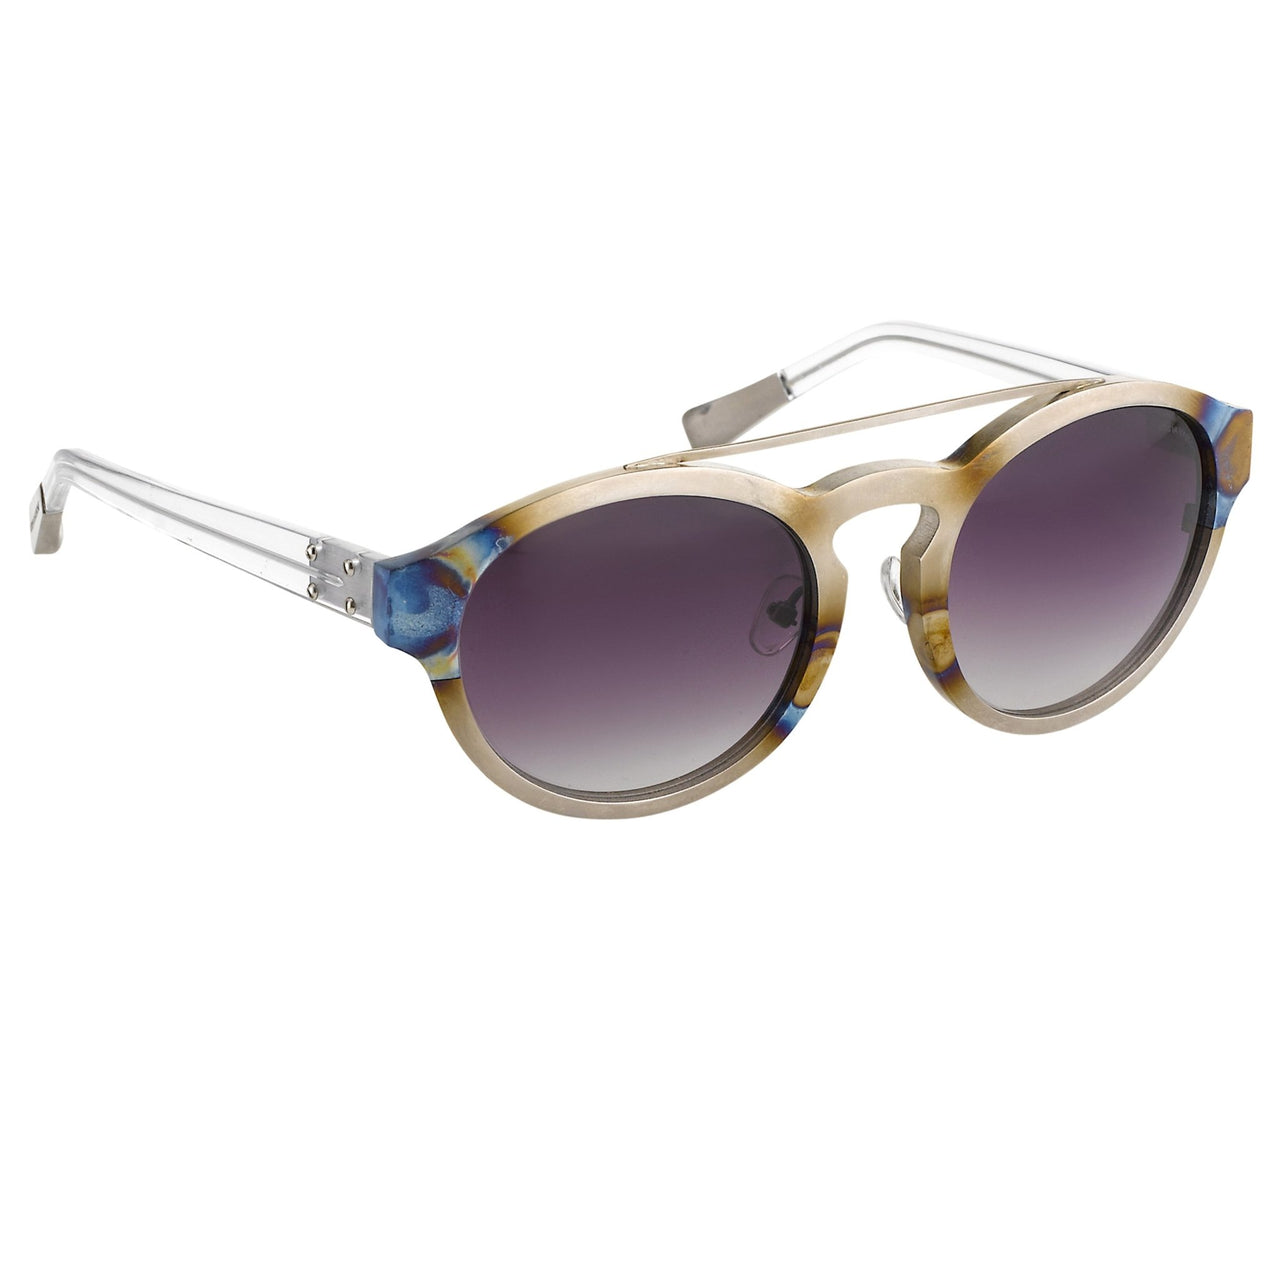 Kris Van Assche x Linda Farrow acetate tinted sunglasses – Fly Thread